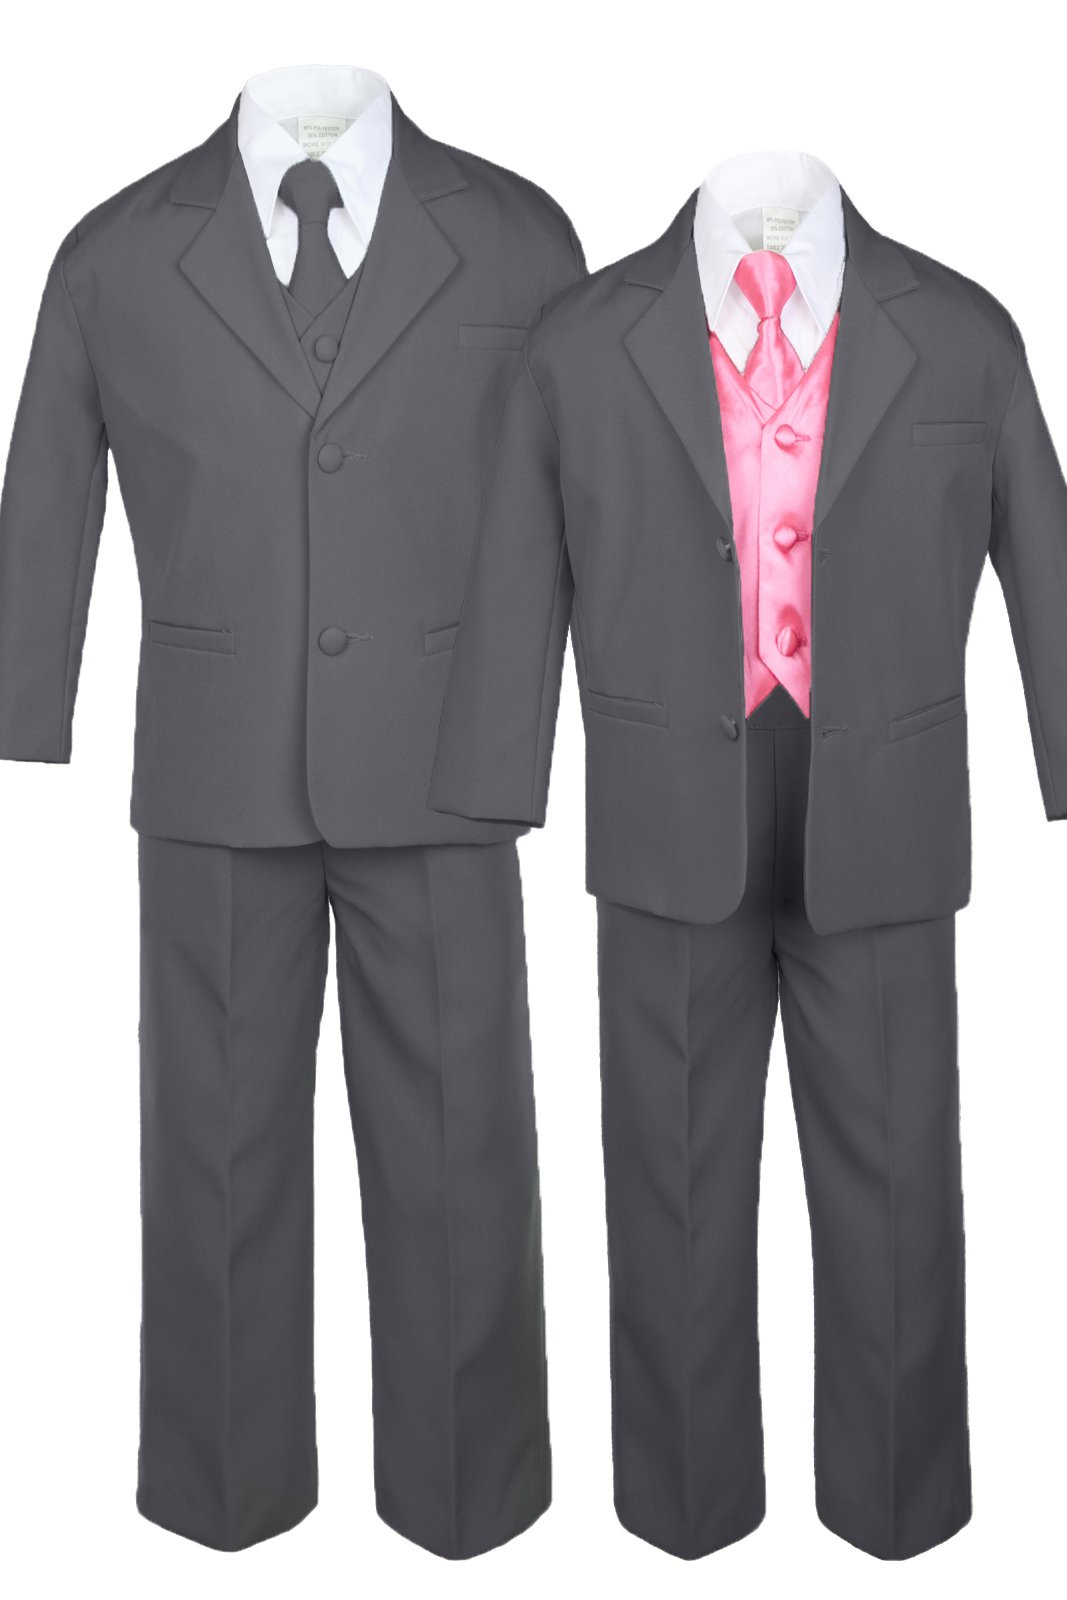 7pc Formal Boys Dark Gray Suits Extra Coral Red Vest Necktie Sets S-20 (20)